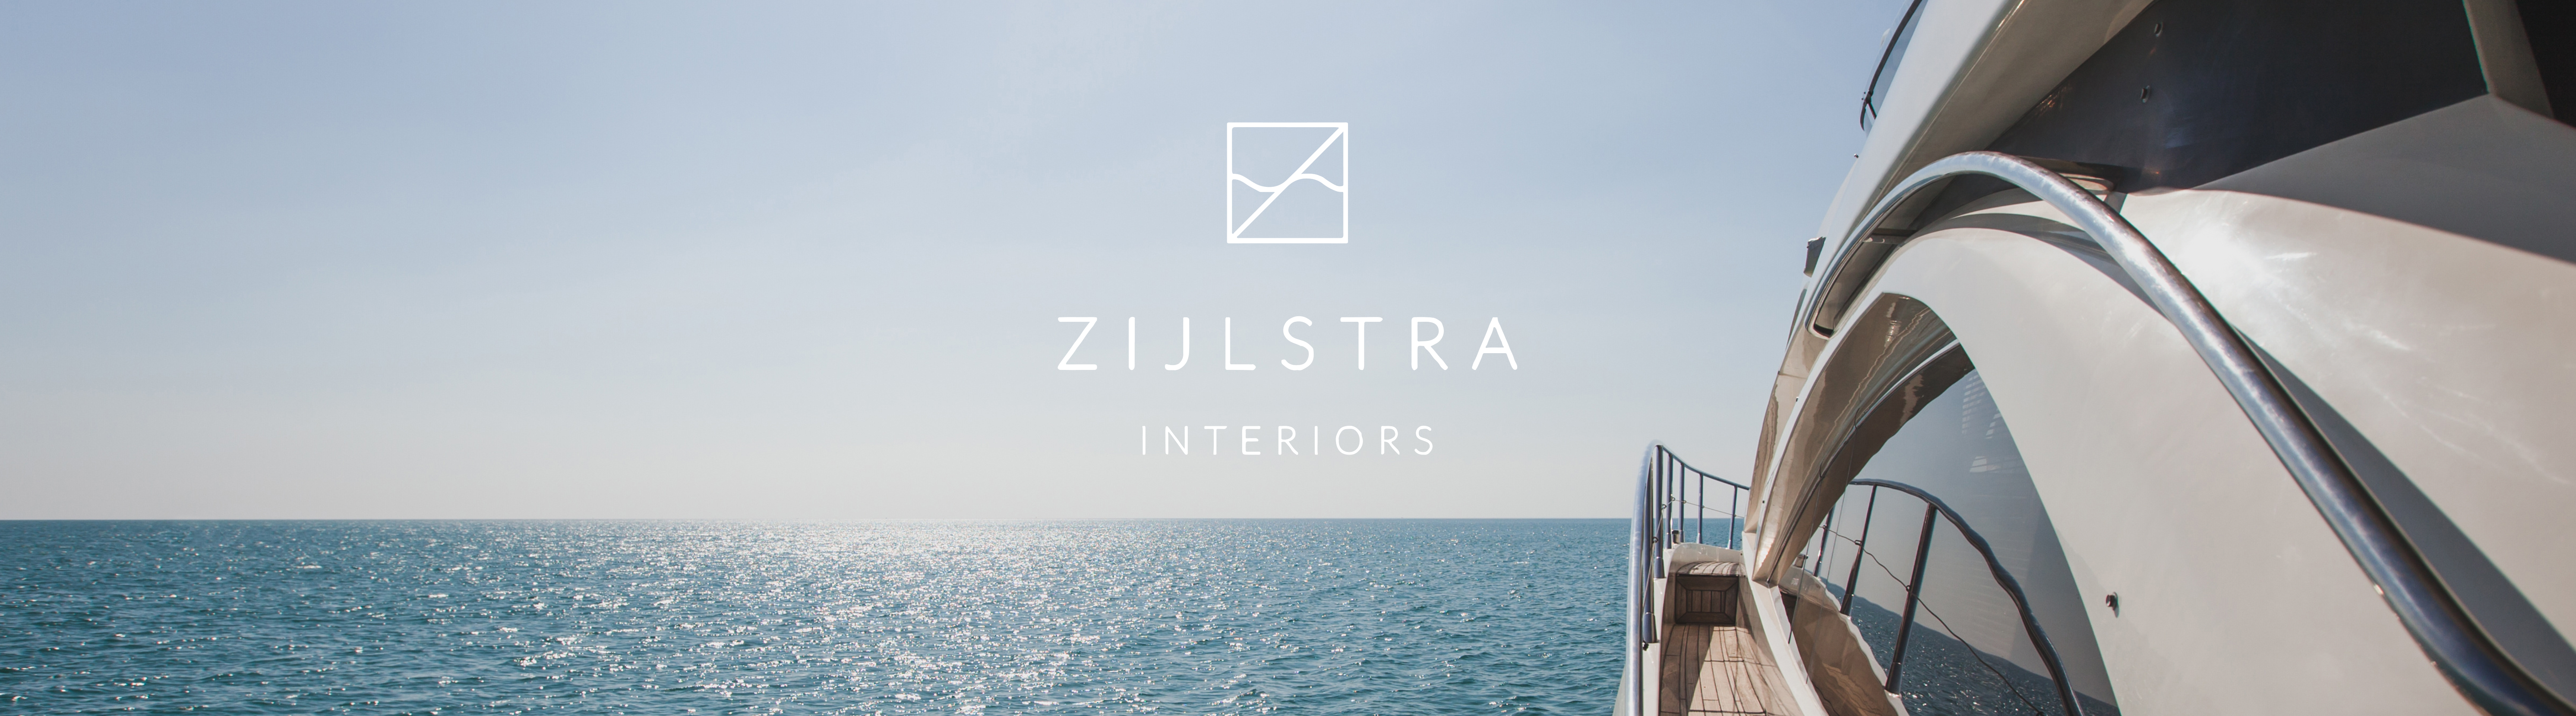 Zijlstra Interiors Launch New Showroom in Palma de Mallorca